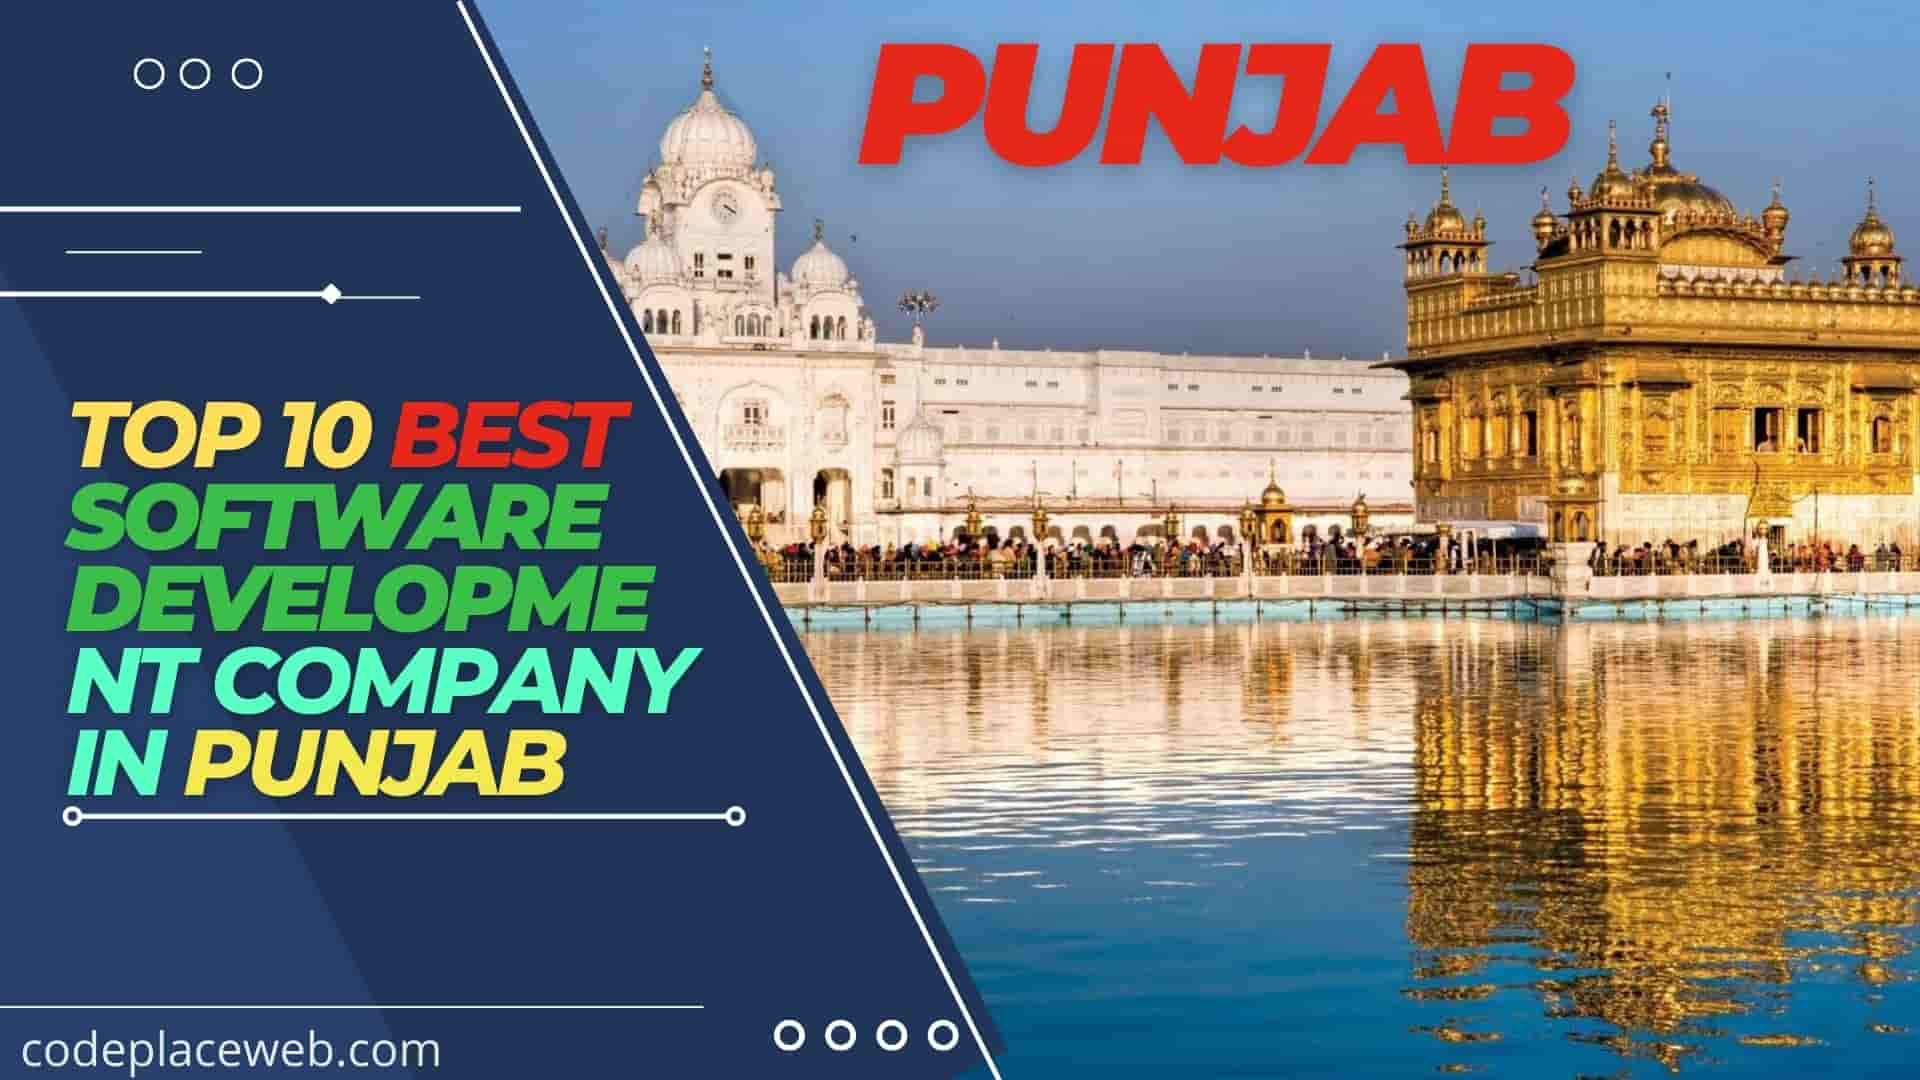 Top-10-Best-Software-Development-Company-in-Punjab